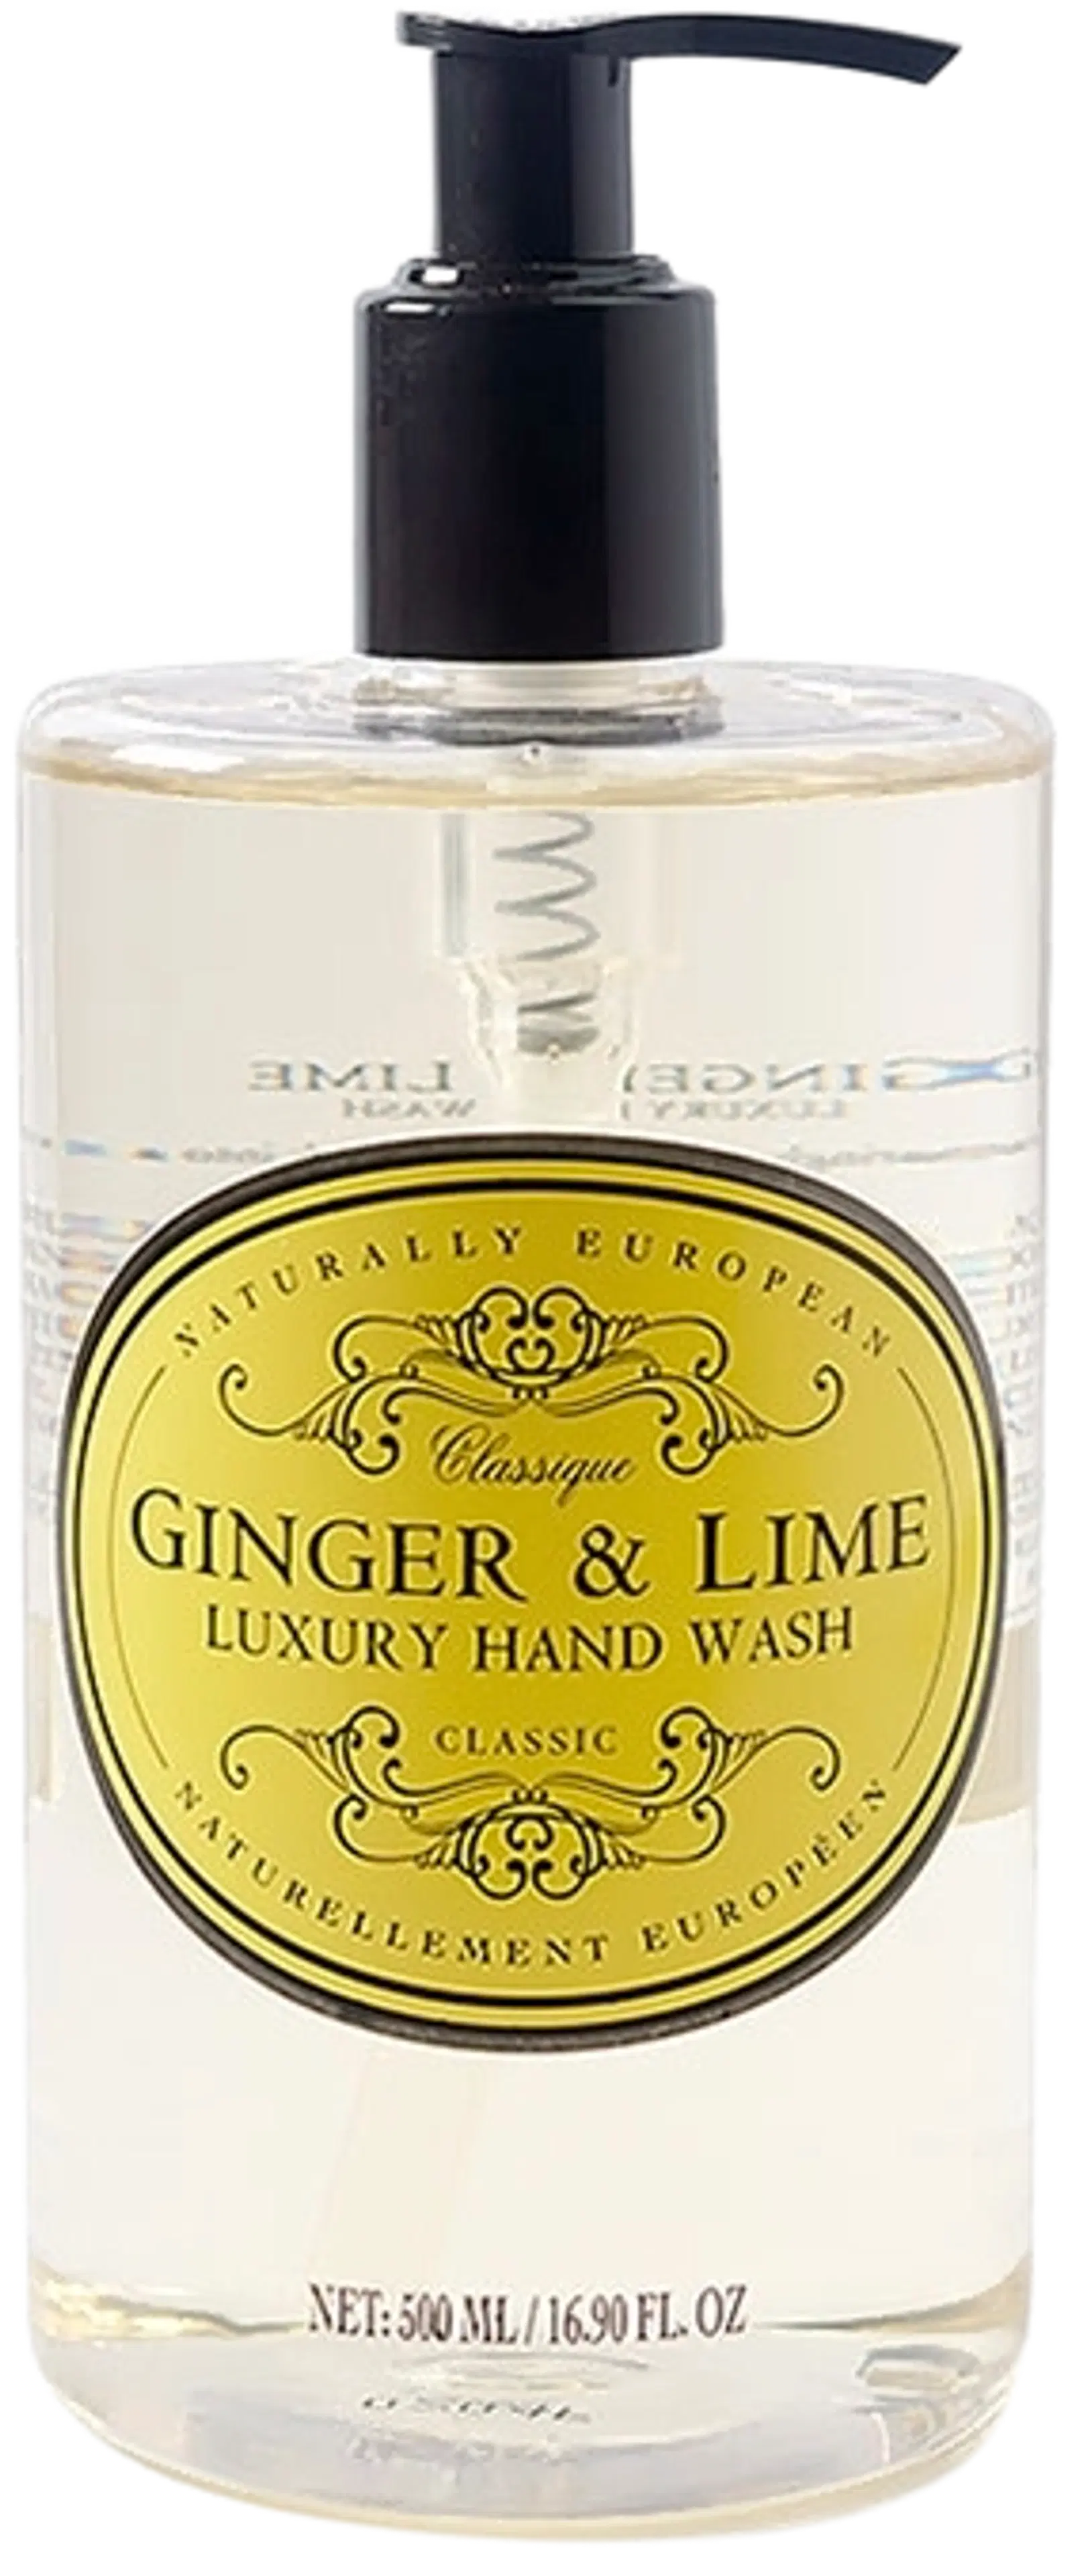 Naturally European Ginger & Lime Luxury Hand Wash käsisaippua 500 ml